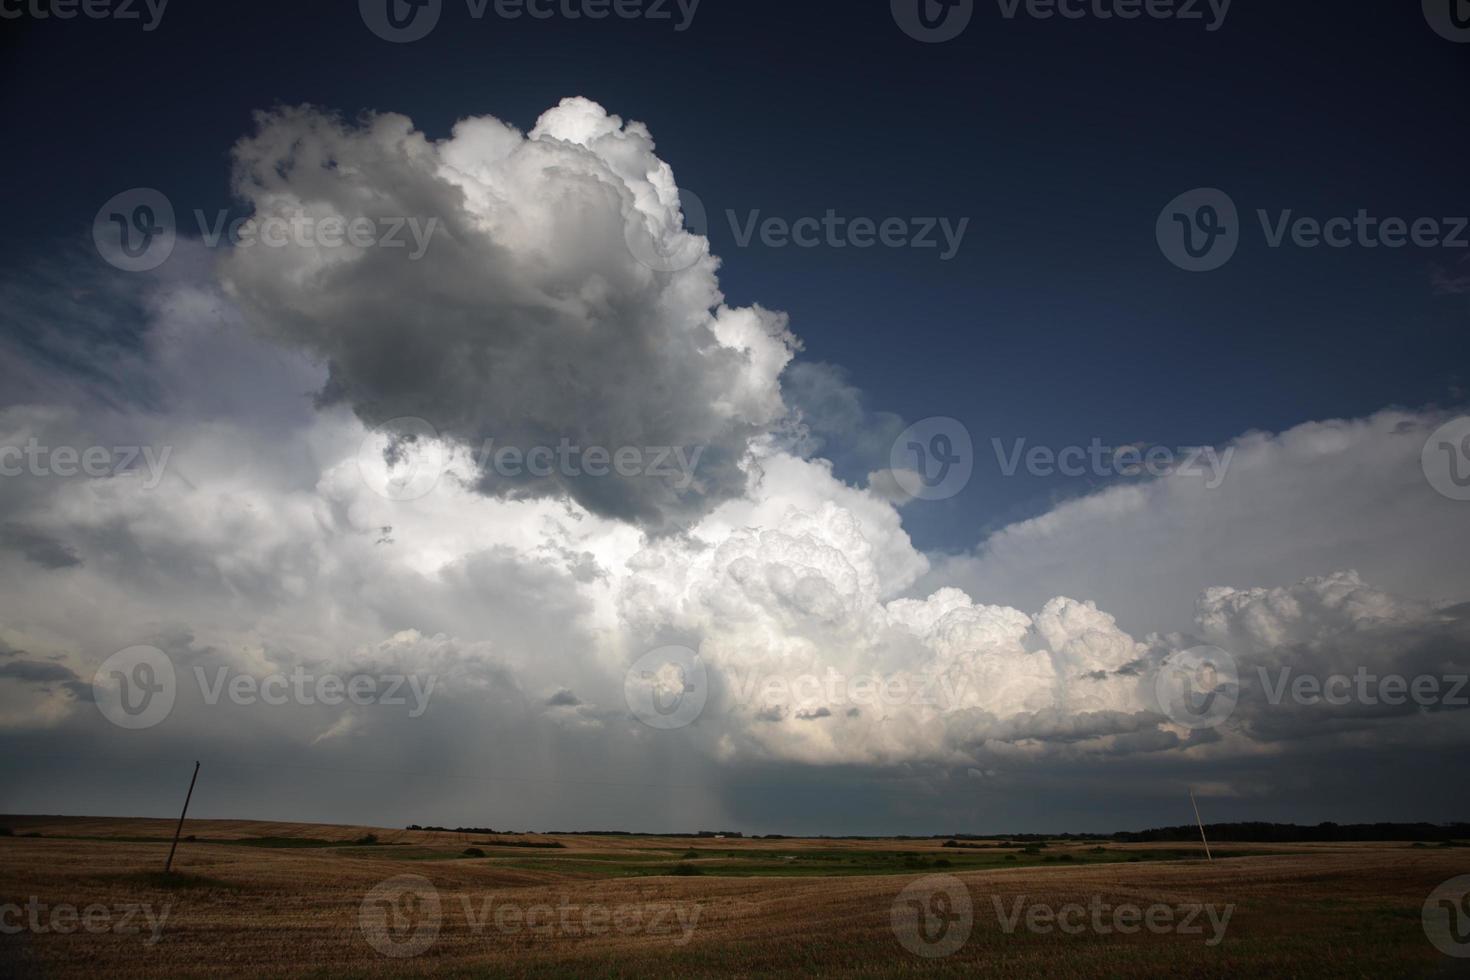 nubes de tormenta sobre saskatchewan foto